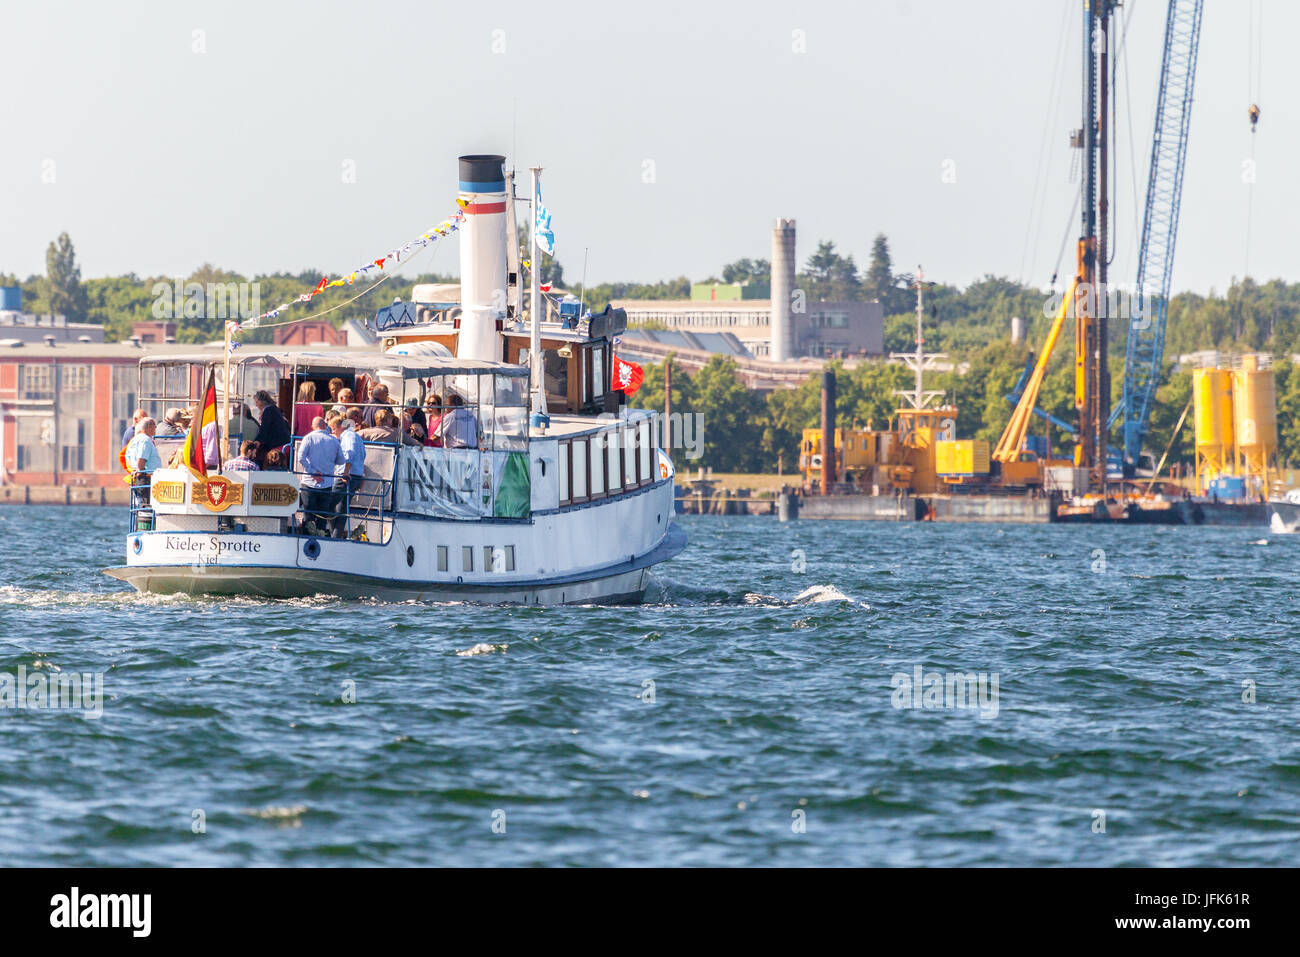 KIEL / GERMANY - JUNE 20, 2017: german passenger ship Kieler Sprotte drives through the water at public event Kieler Woche. Stock Photo